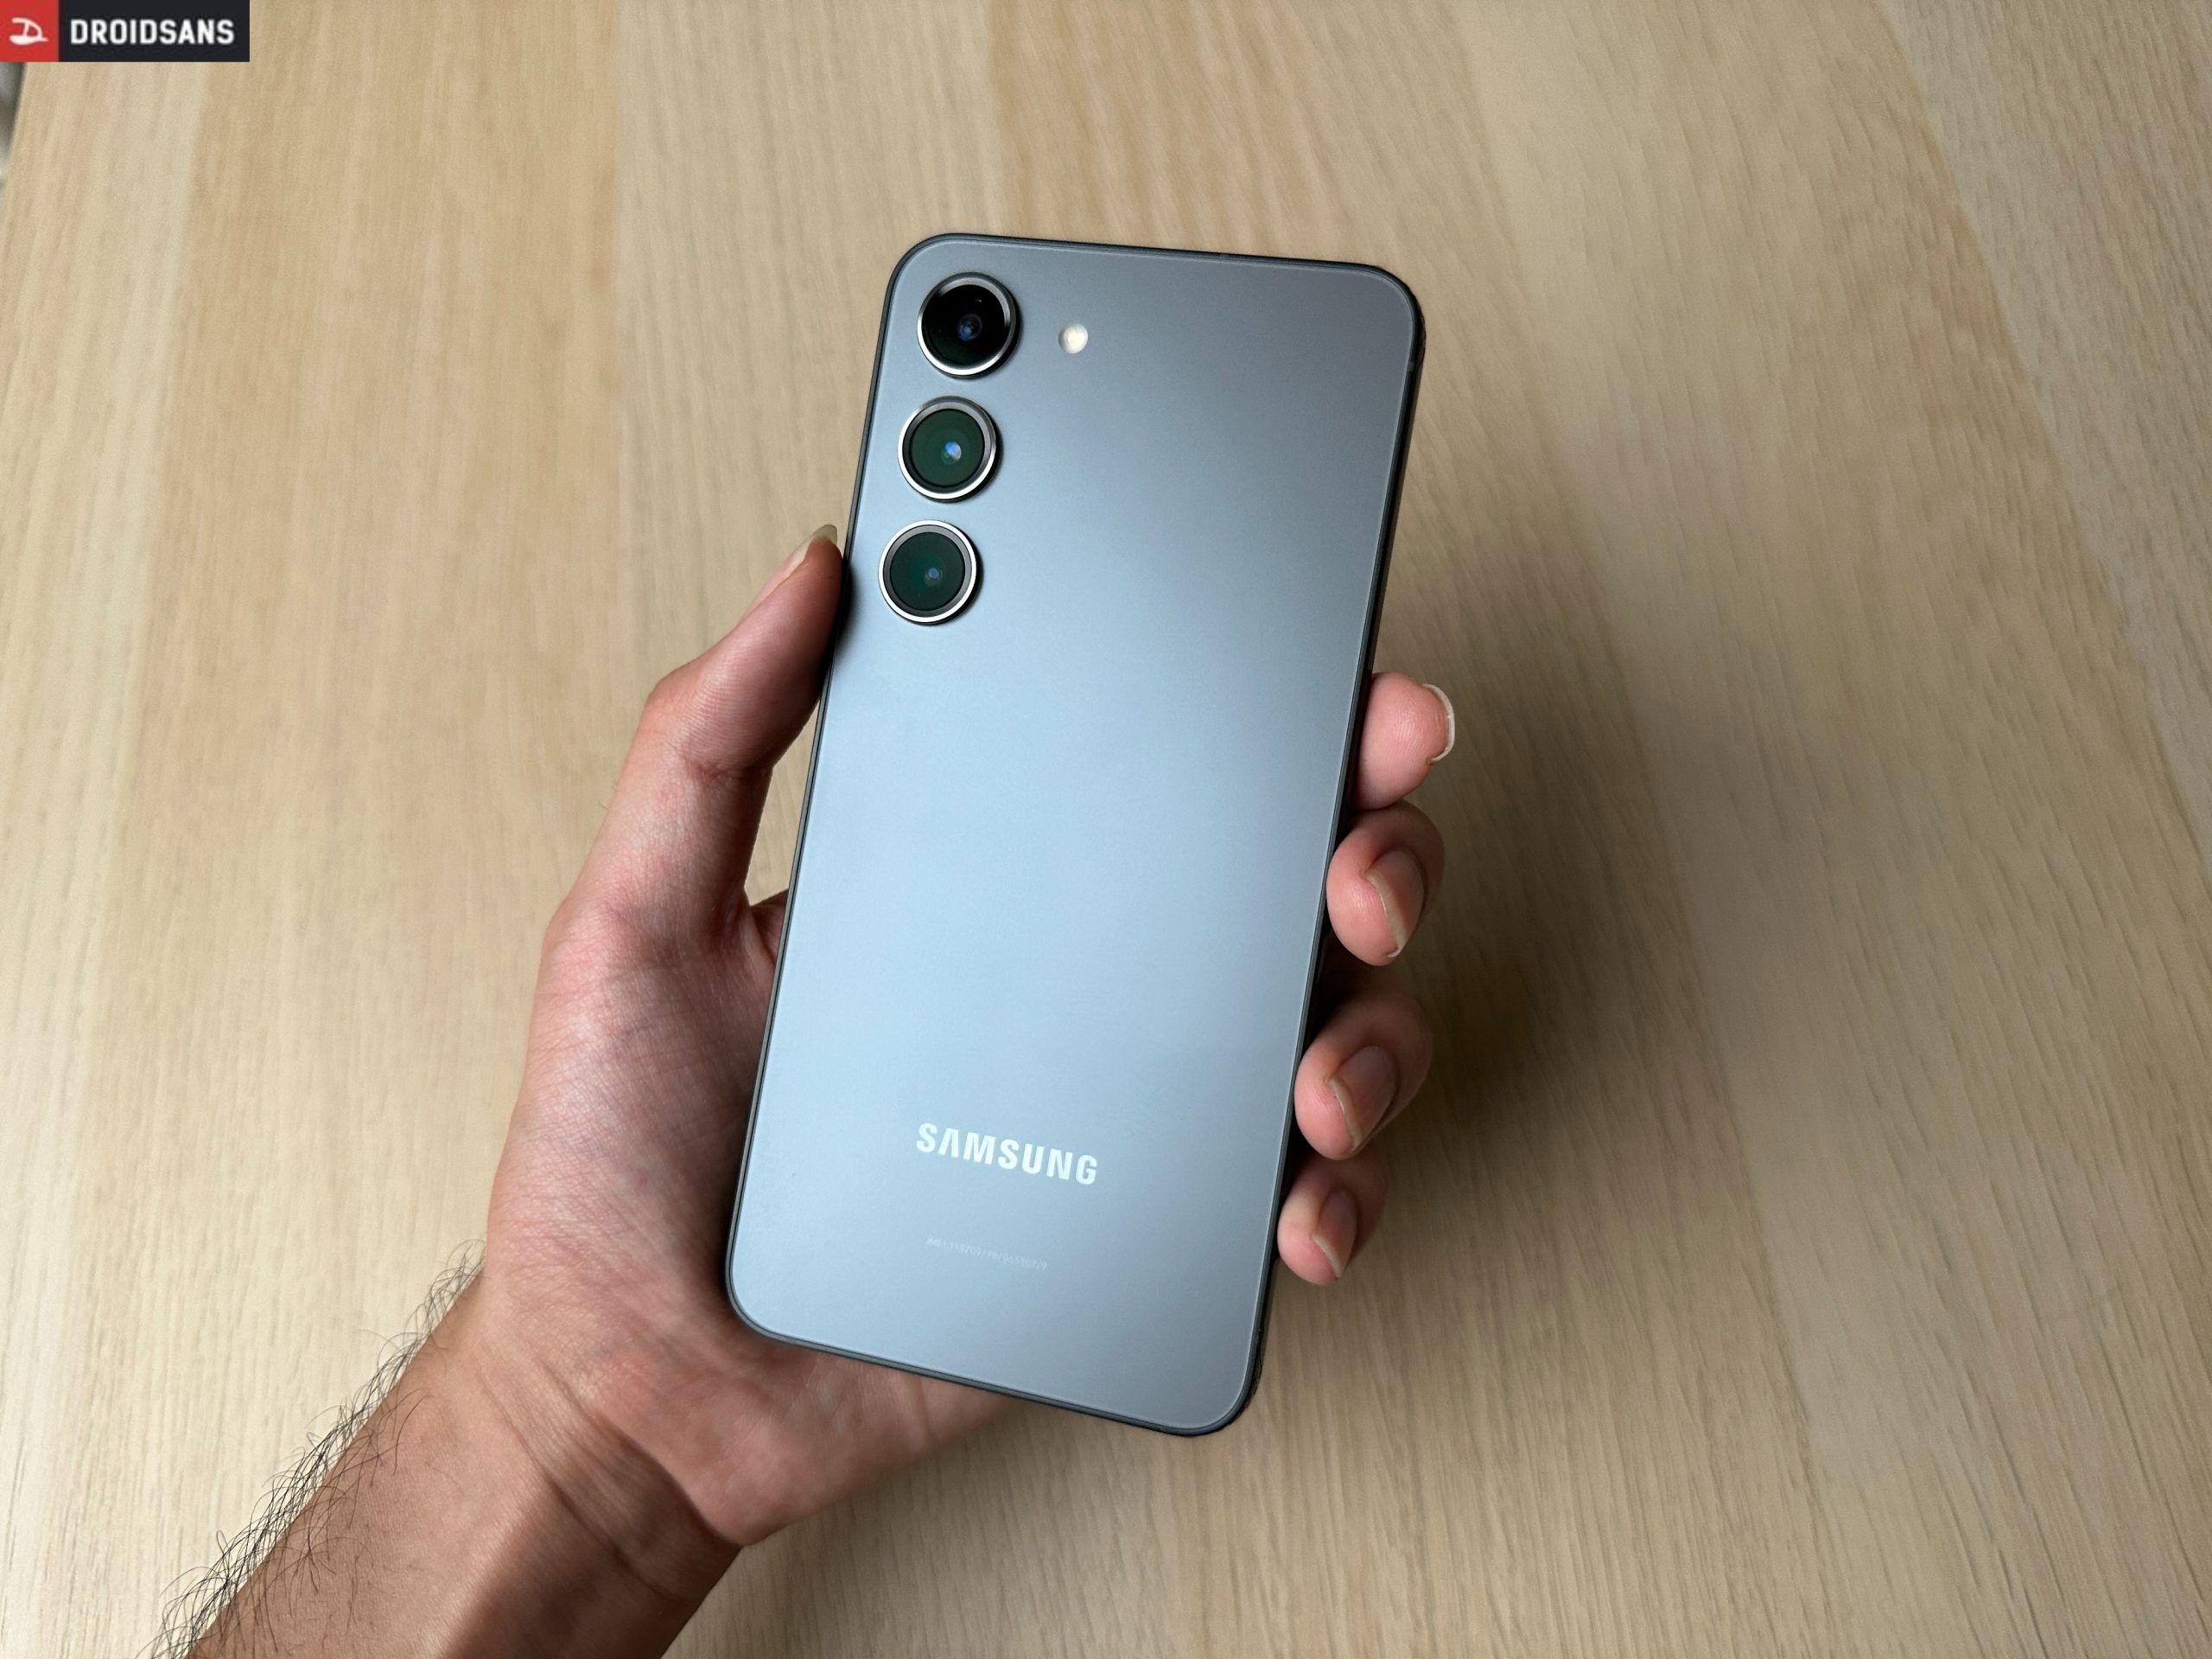 Hands-on | ชมภาพสีพิเศษสุดจี๊ด Samsung Galaxy S23, S23+, S23 Ultra ครบทุกสี